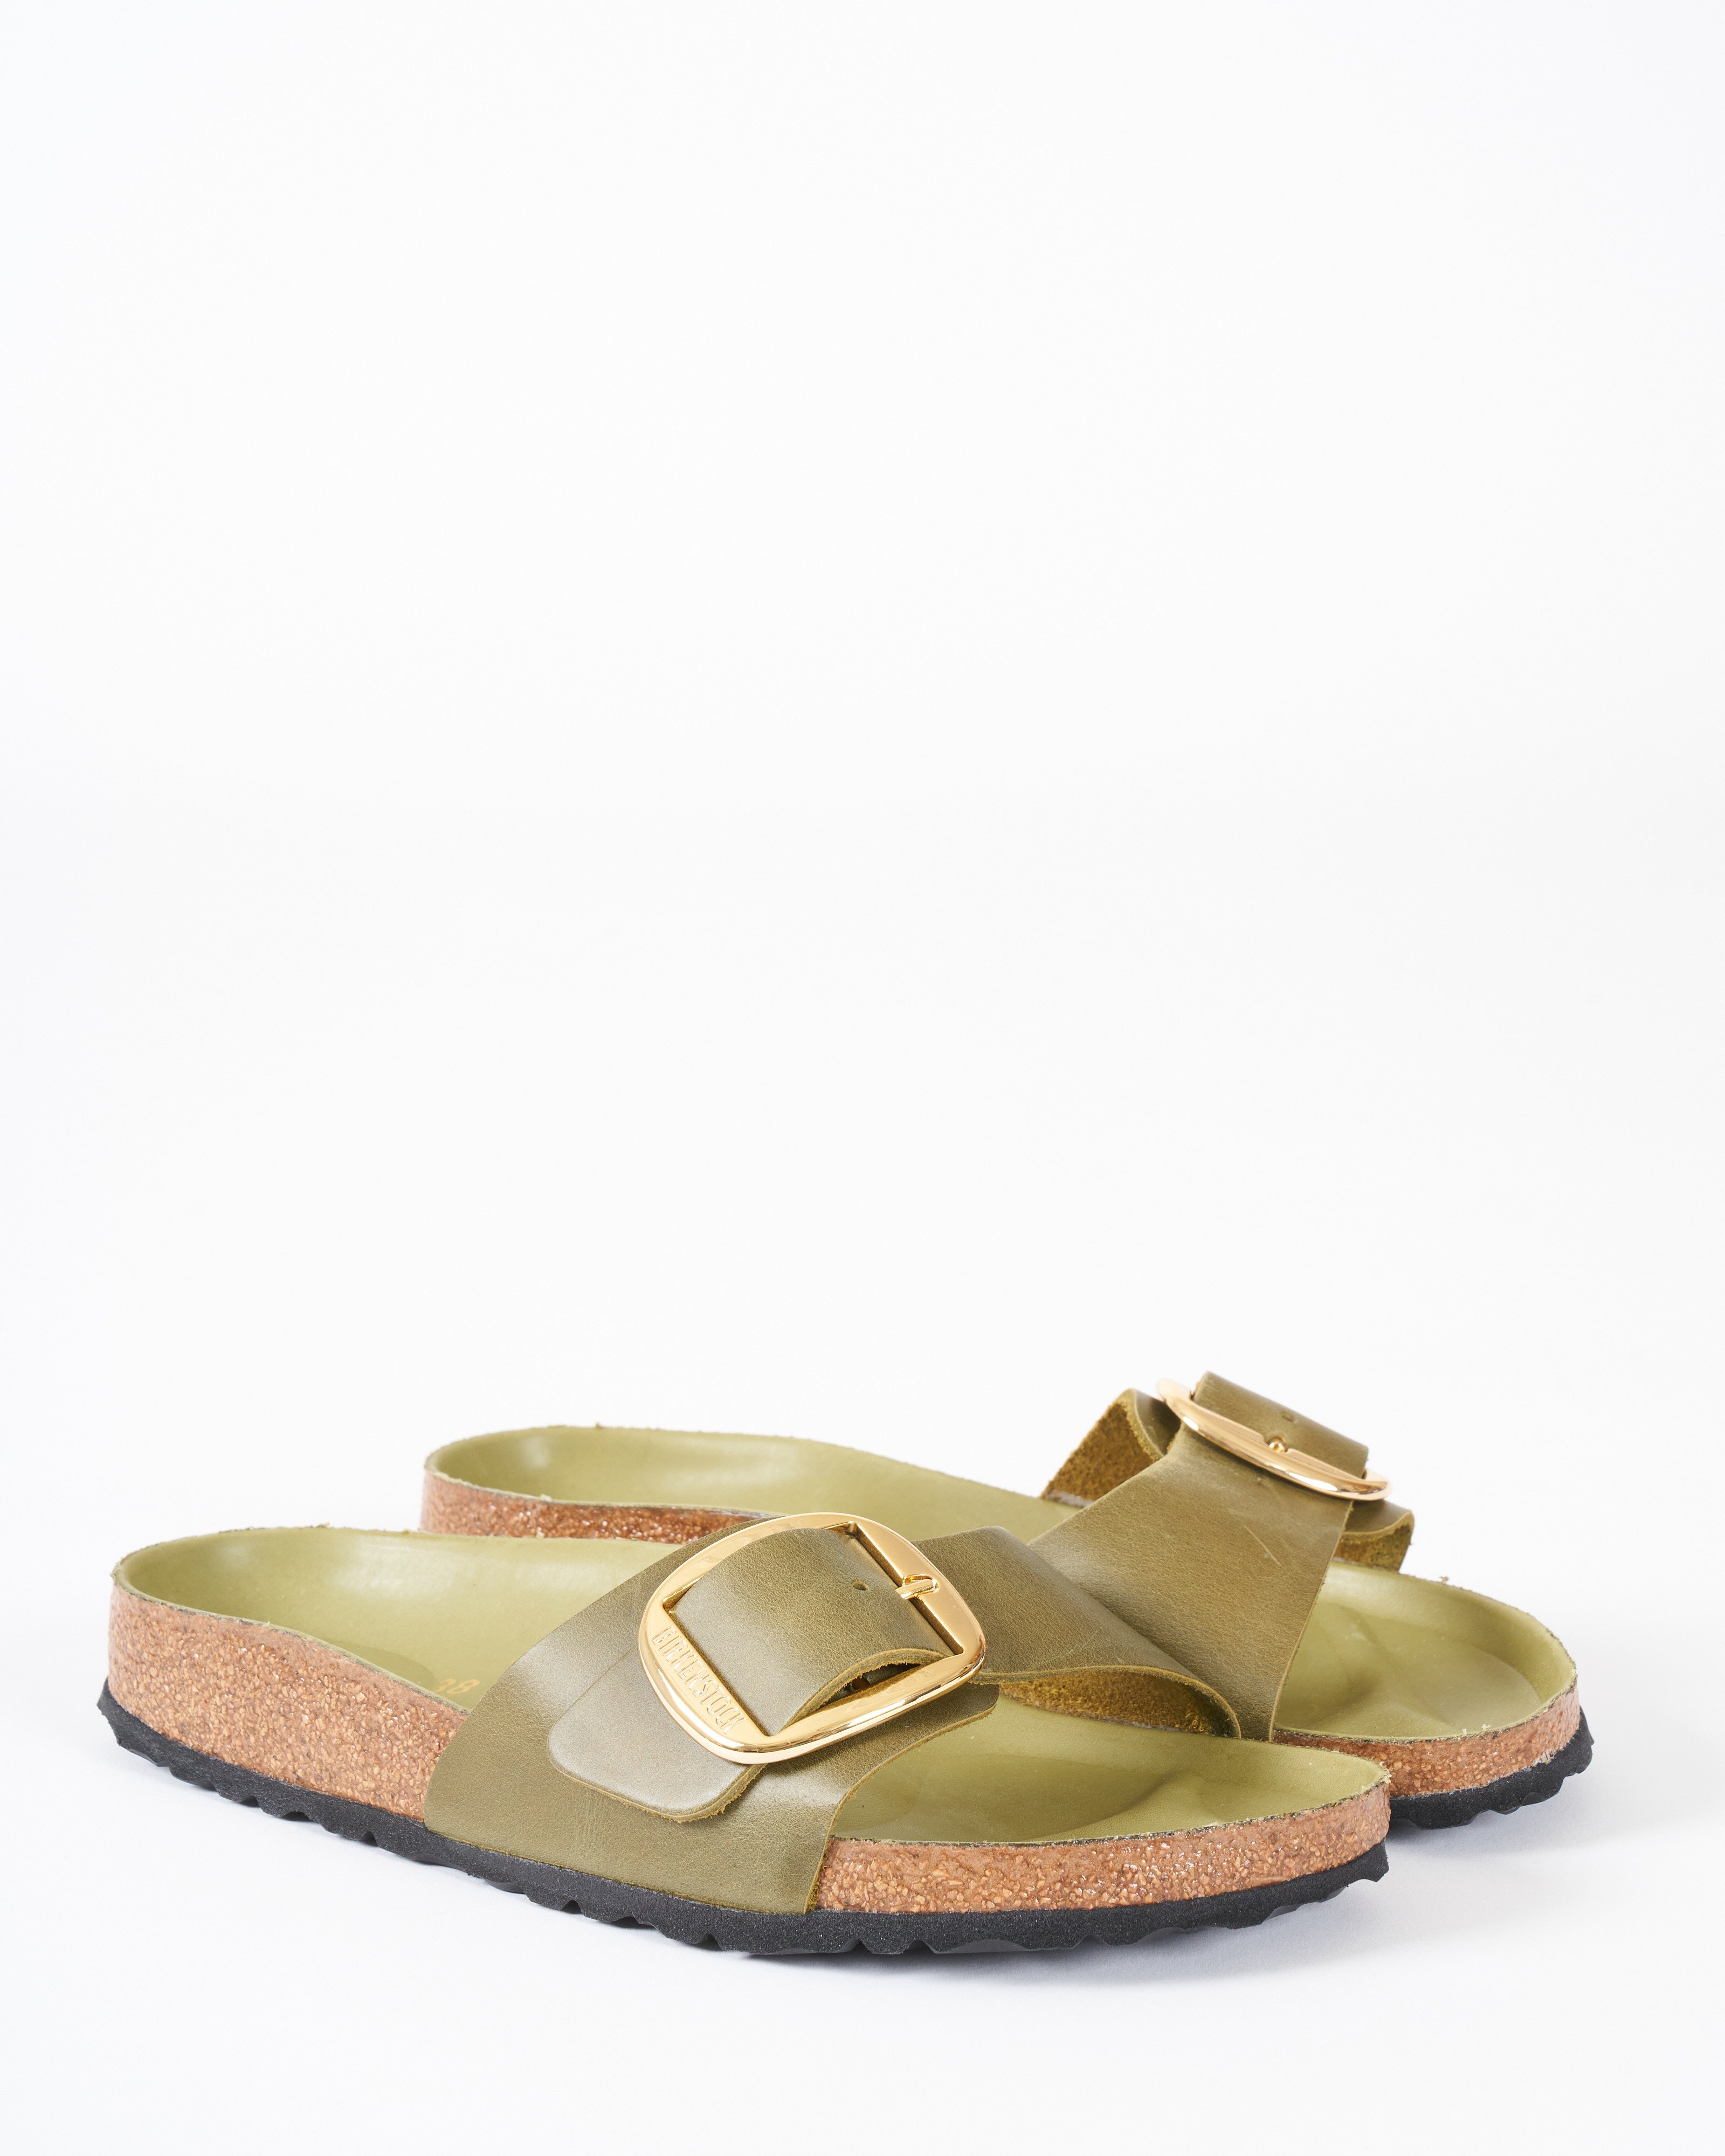 Birkenstock, sandalo madrid con fibbia grande - pelle oliata verde oliva